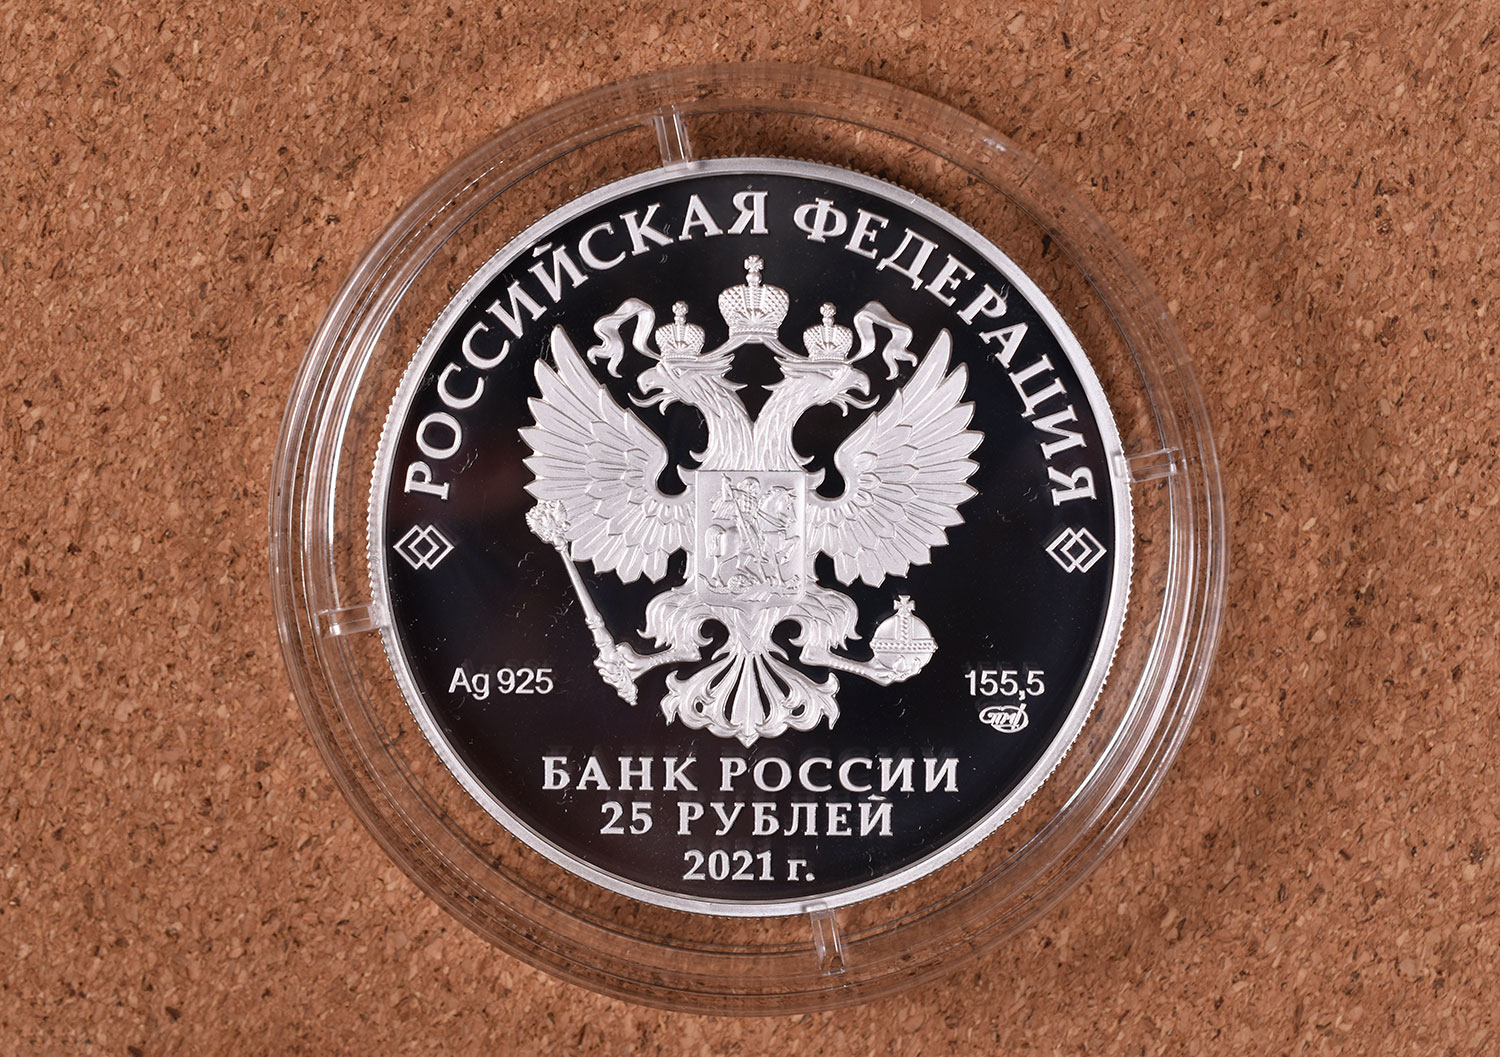 25 рубля 2021 - Никулин (аверс)